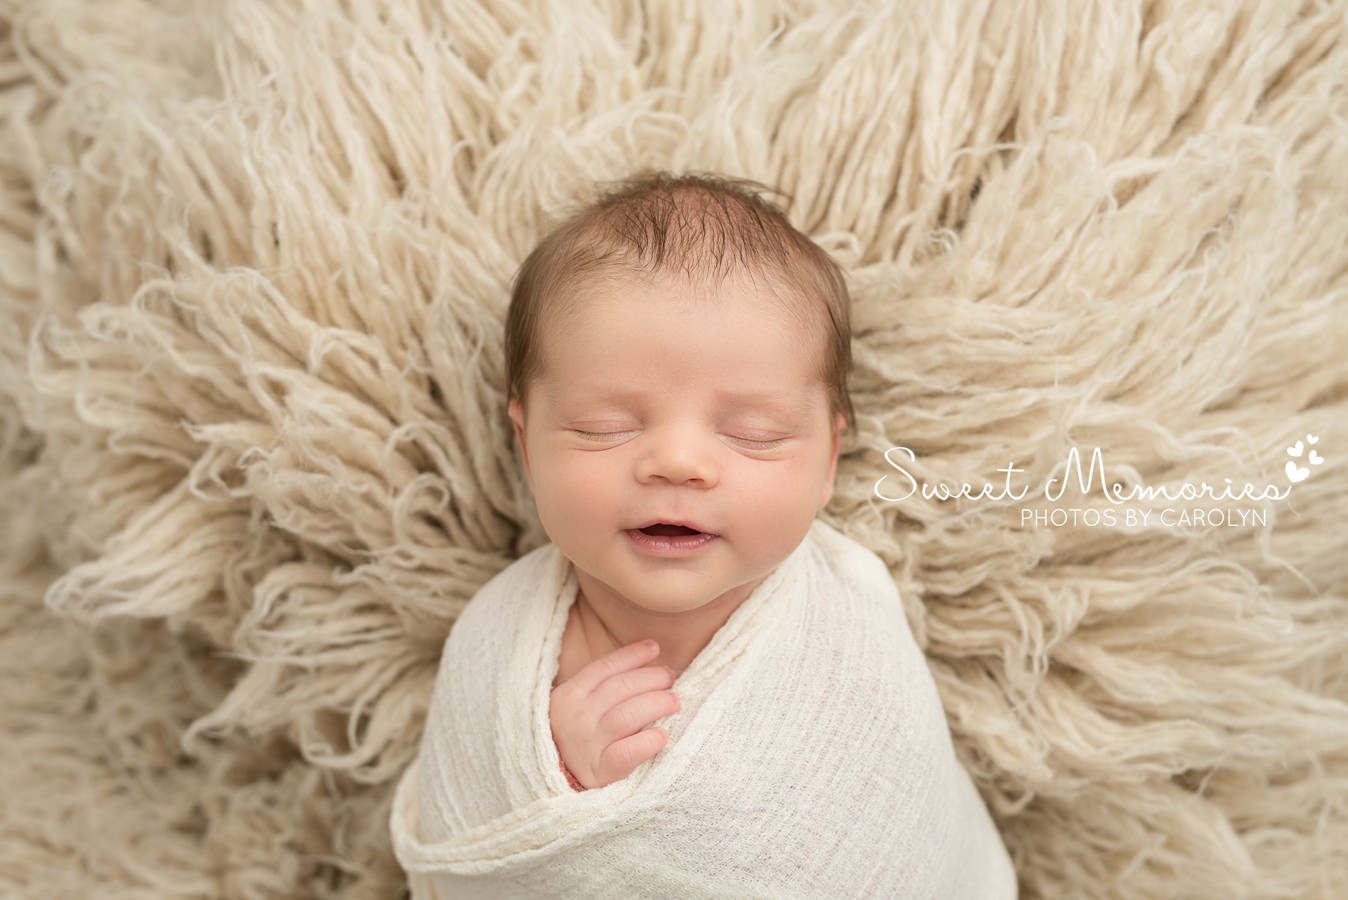 Wrapped Newborn Boy in cream smile Newborn Photography | Austin, Texas Newborn Photographer | Sweet Memories Photos by Carolyn